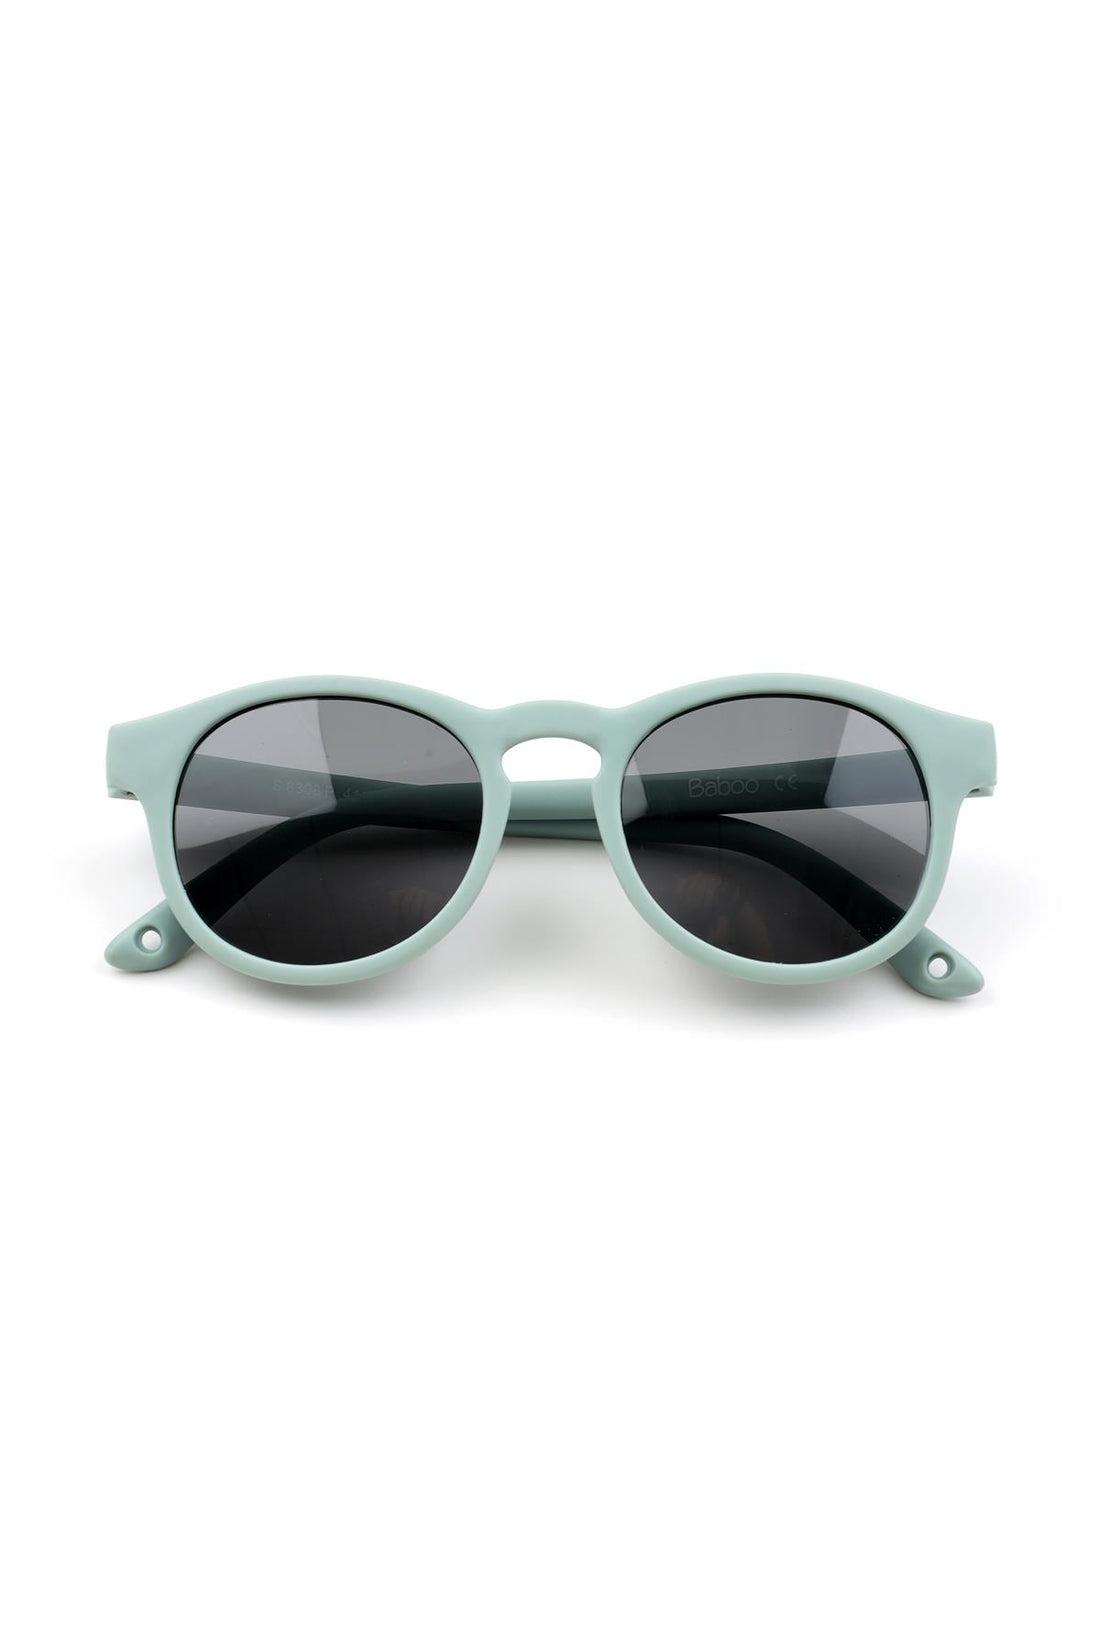 Ultra Light Midi Size Children's Sunglasses Blue